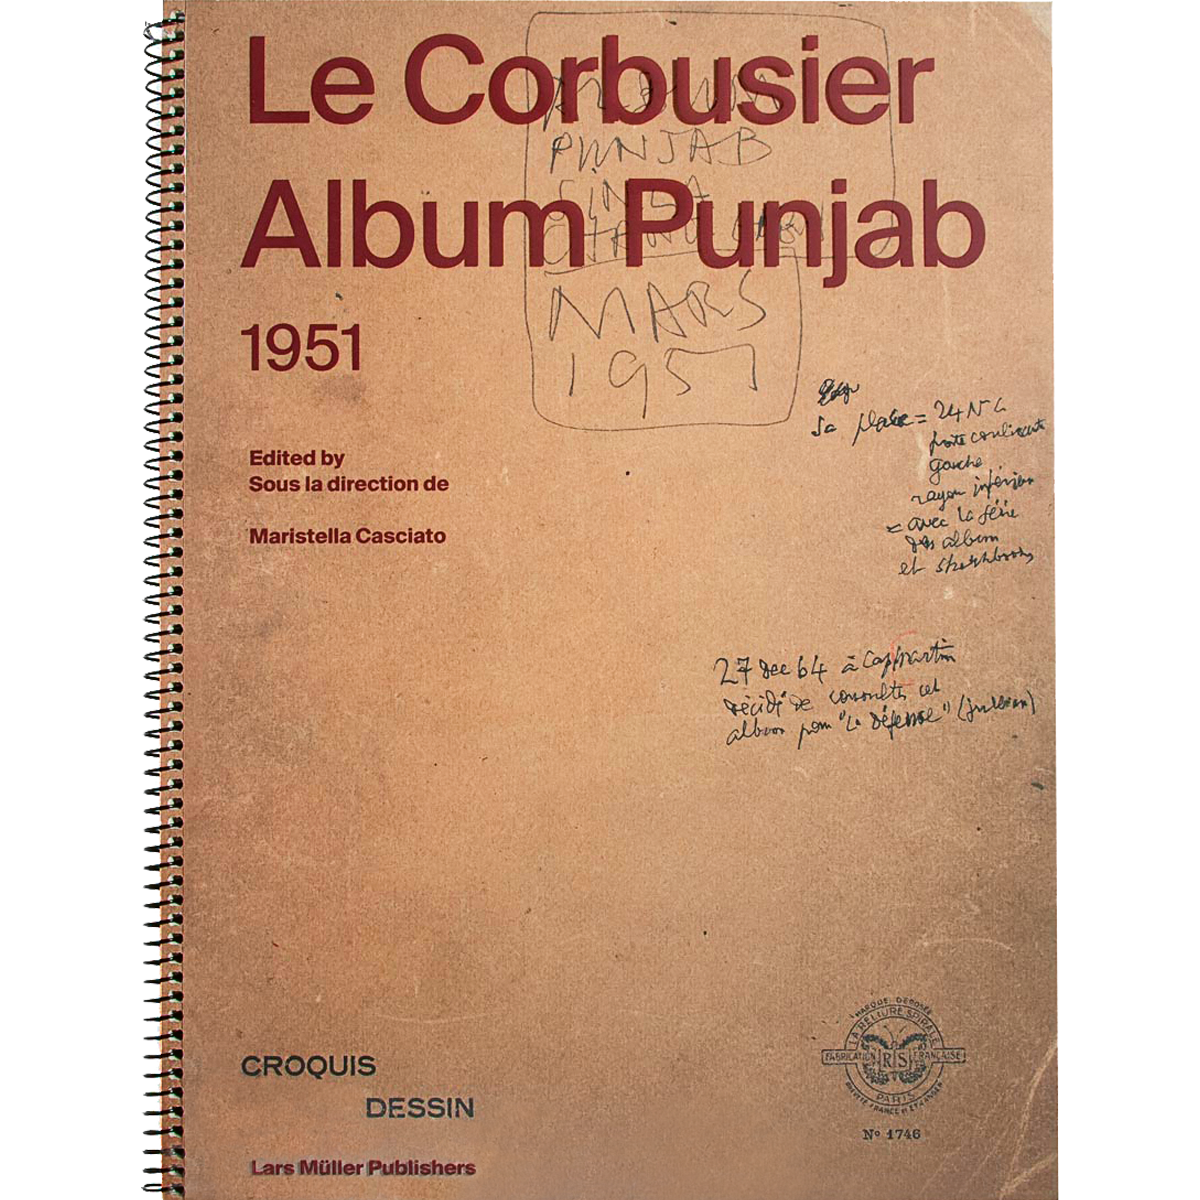 Le Corbusier Album Punjab